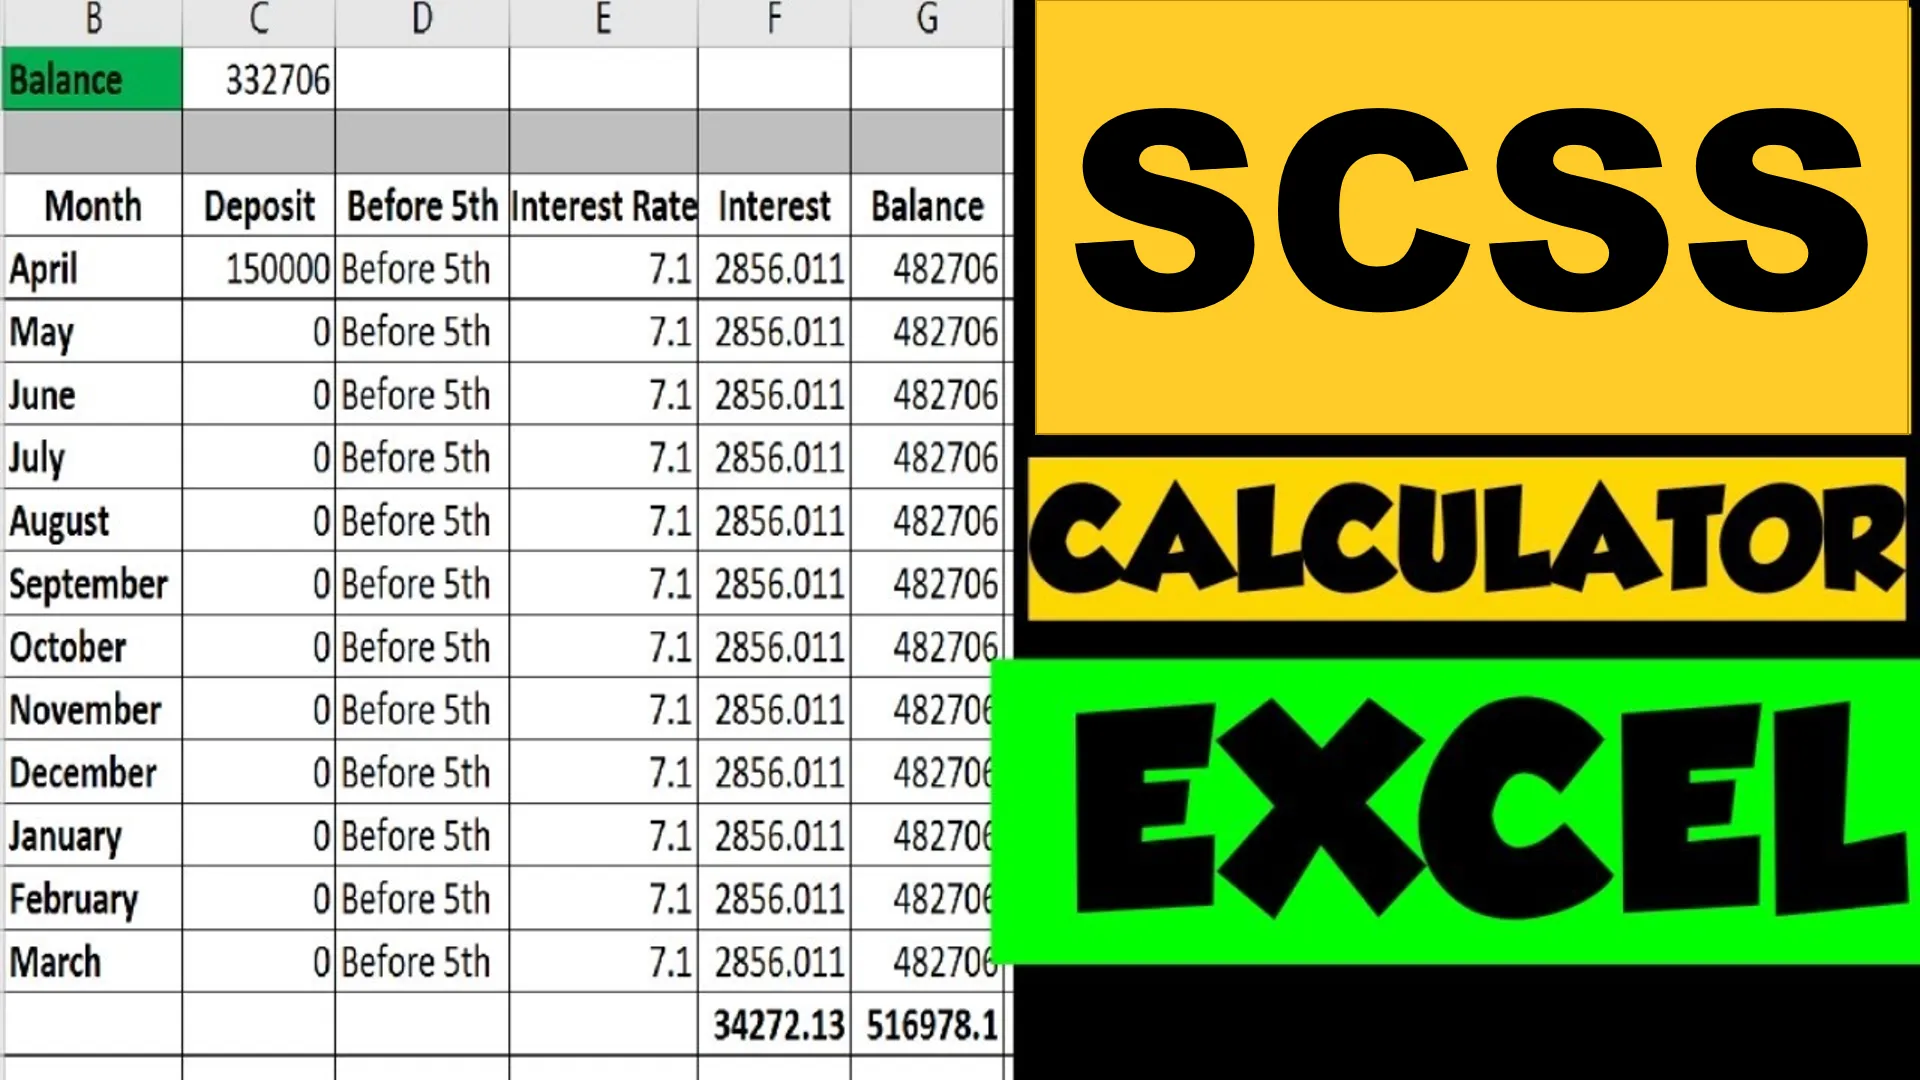 SCSS Calculator Excel Senior Citizen Saving Scheme [VIDEO] FinCalC Blog